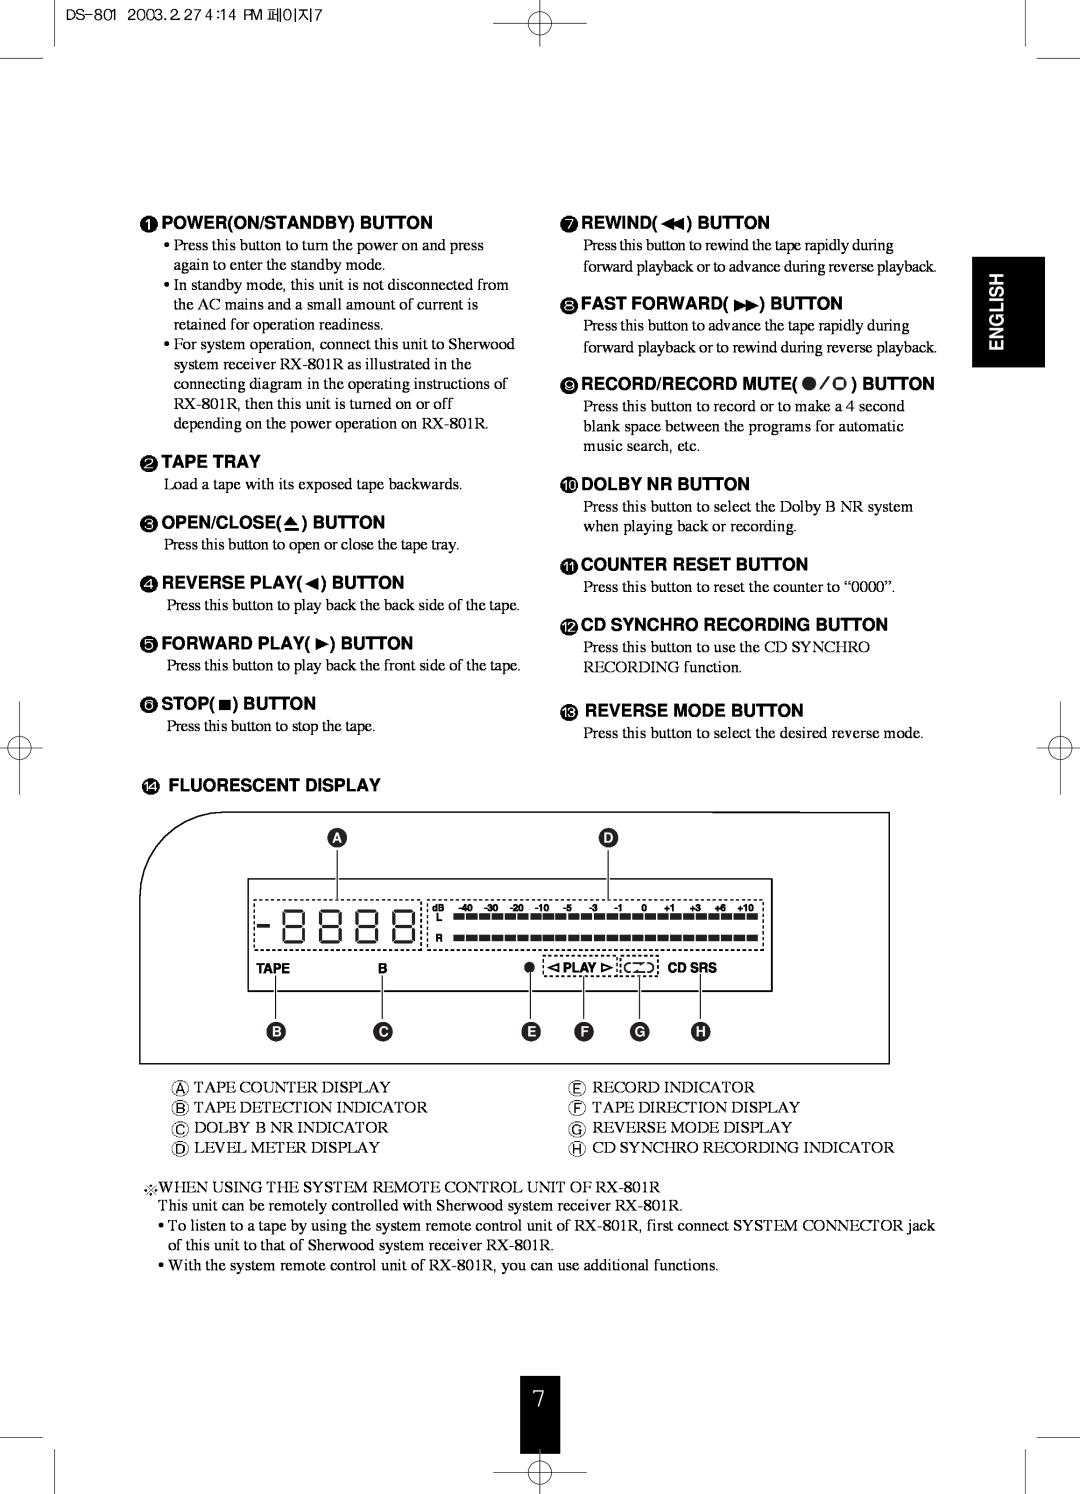 Sherwood DS-801 manual Poweron/Standby Button, English 